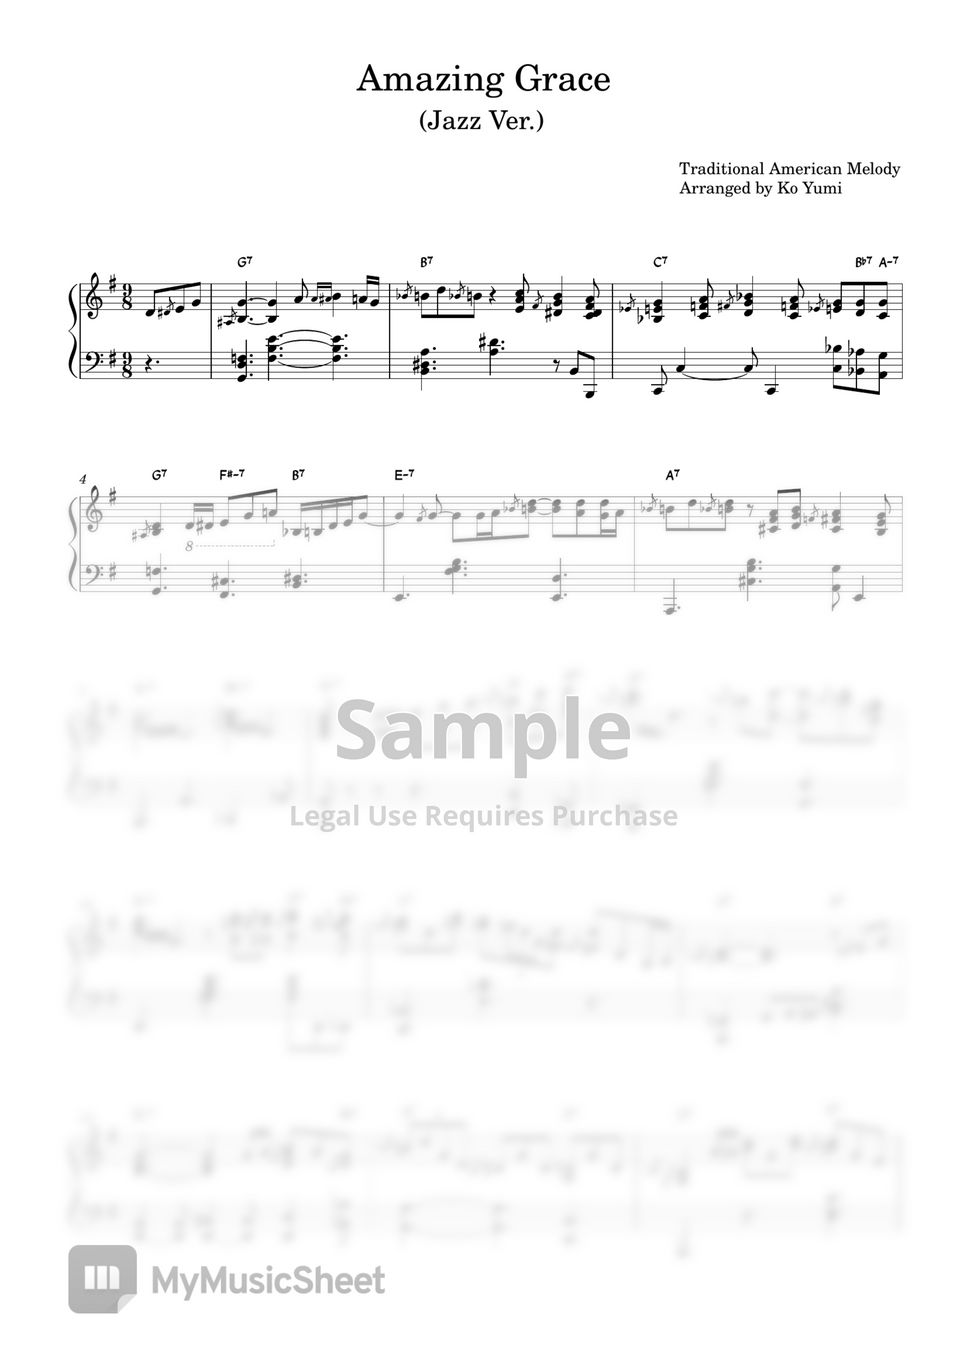 Traditional American Melody - Amazing Grace (Jazz Ver.(Blues)) by KoYumi Music